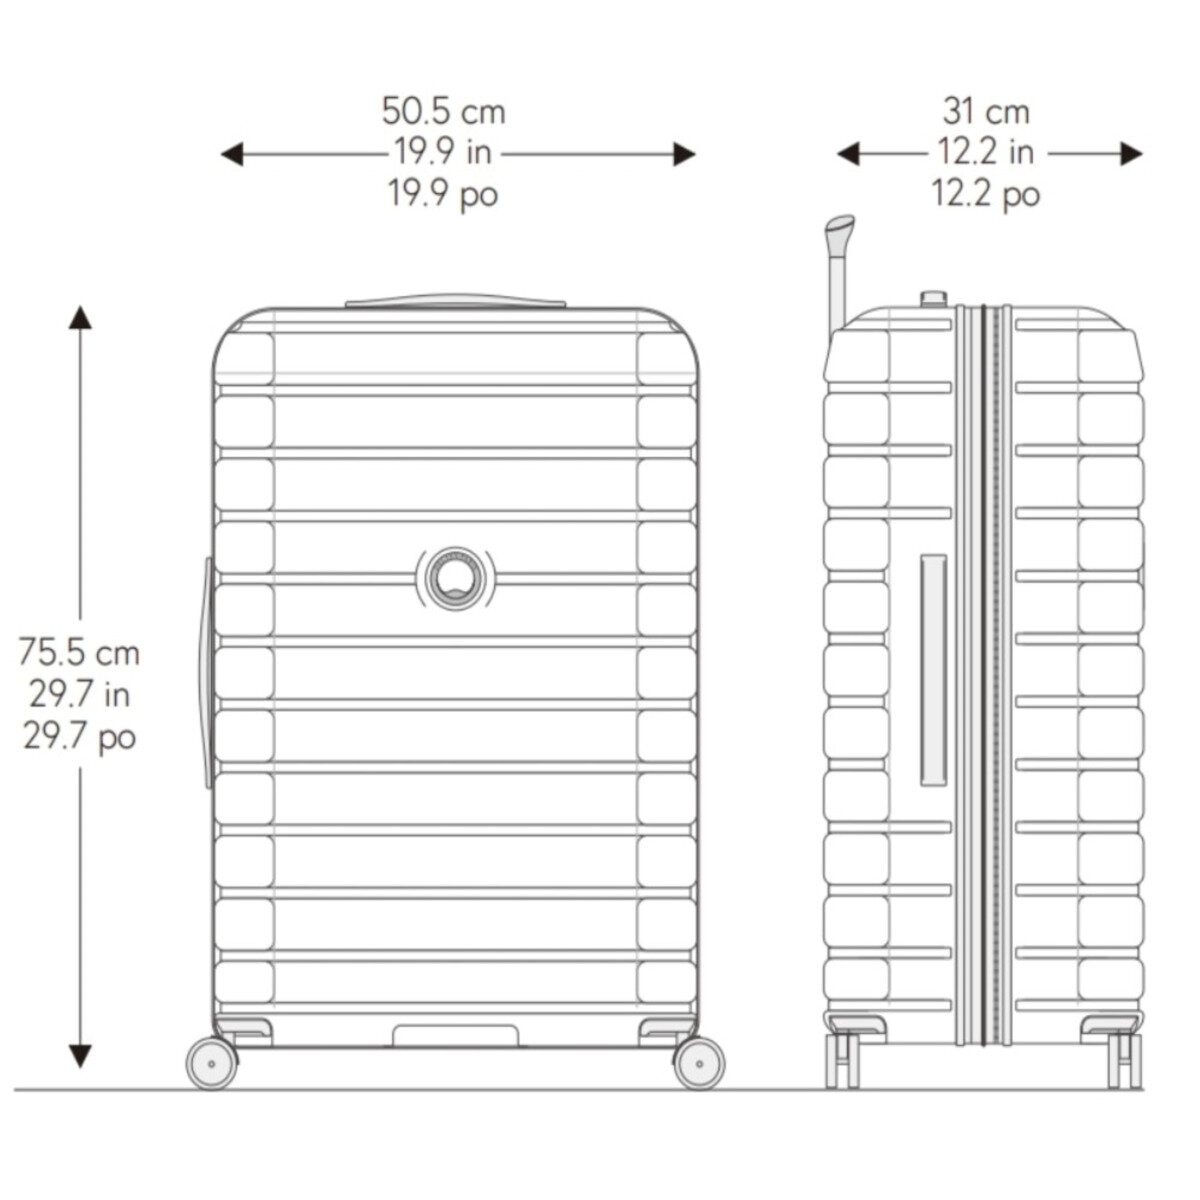 DELSEY PARIS スーツケース 2個セット (23インチ & 30インチ) | Costco